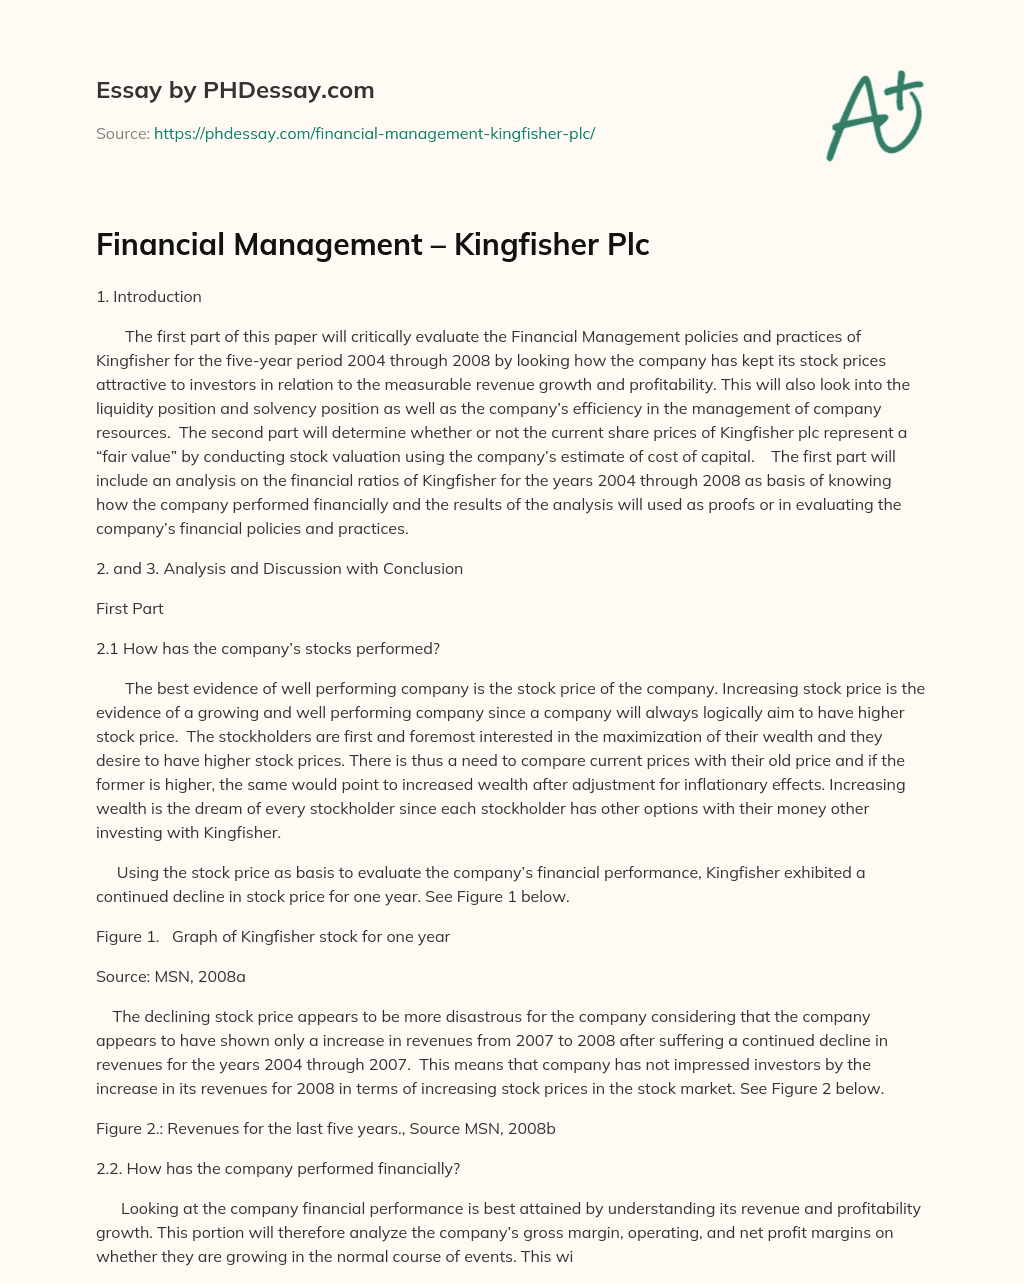 Financial Management – Kingfisher Plc essay